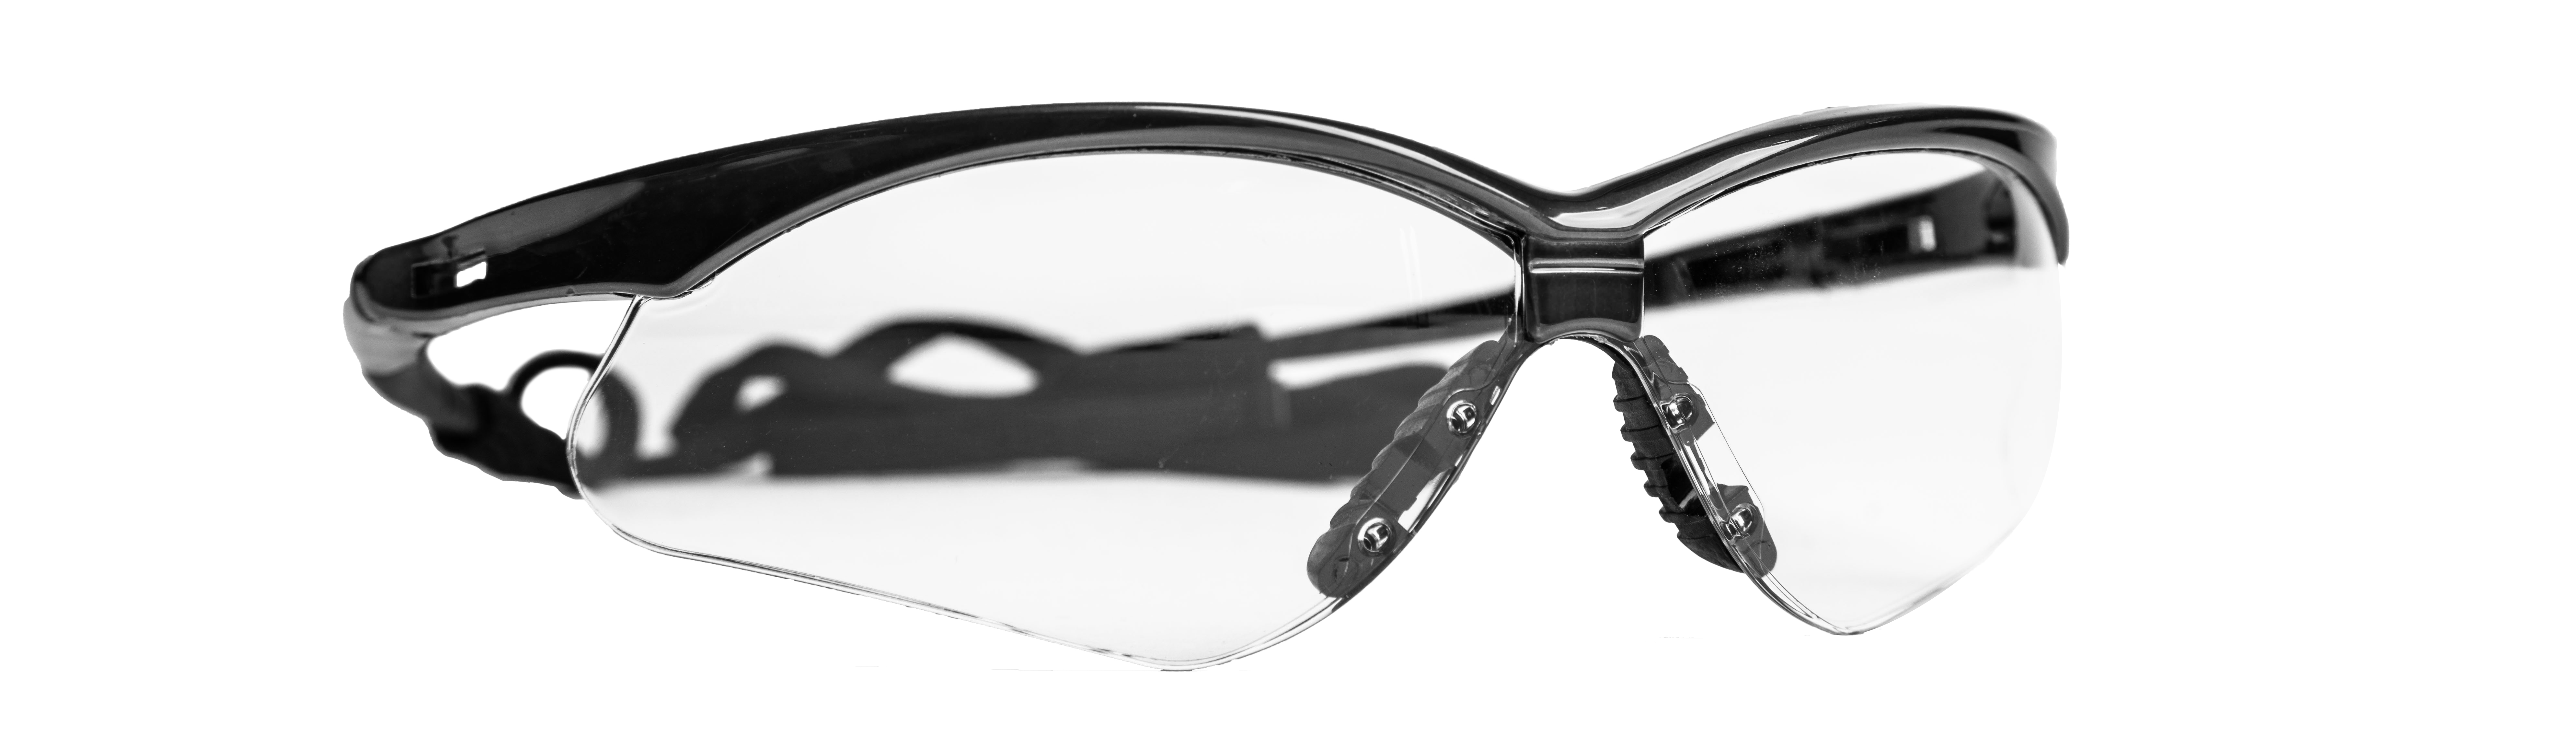 Weldmark by Jackson SG black half frame vision correcting safety glasses, with clear polycarbonate anti-fog lenses.